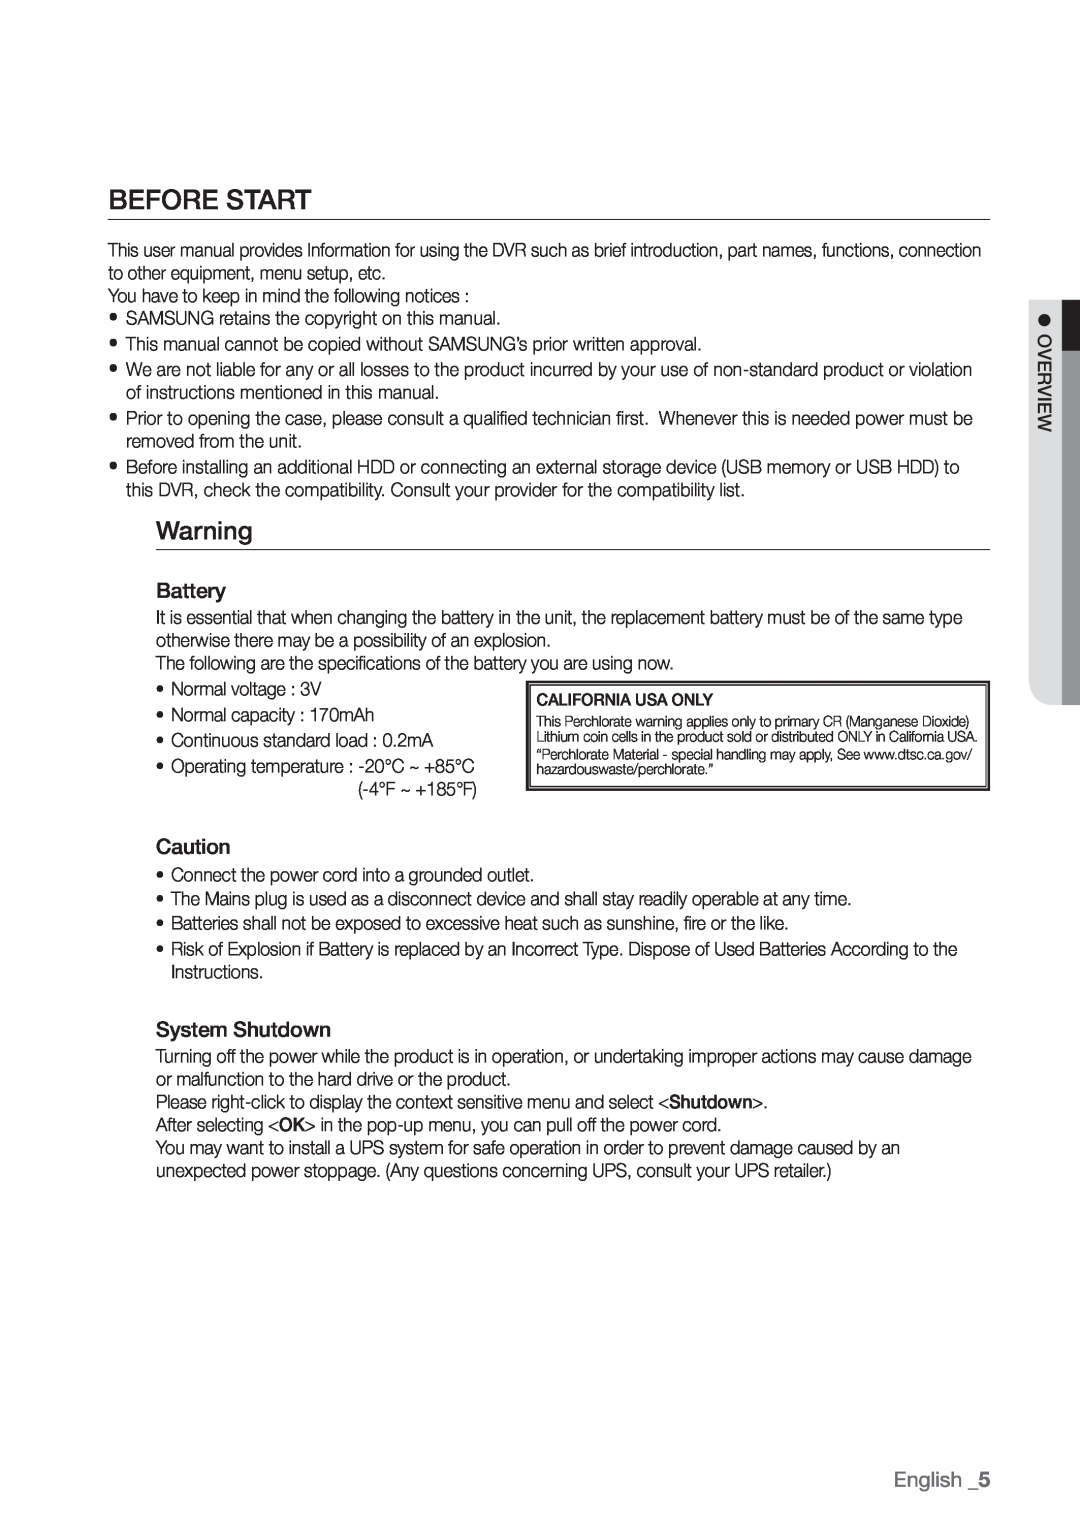 Samsung SDR3100 user manual Before Start, Battery, System Shutdown, English _5 